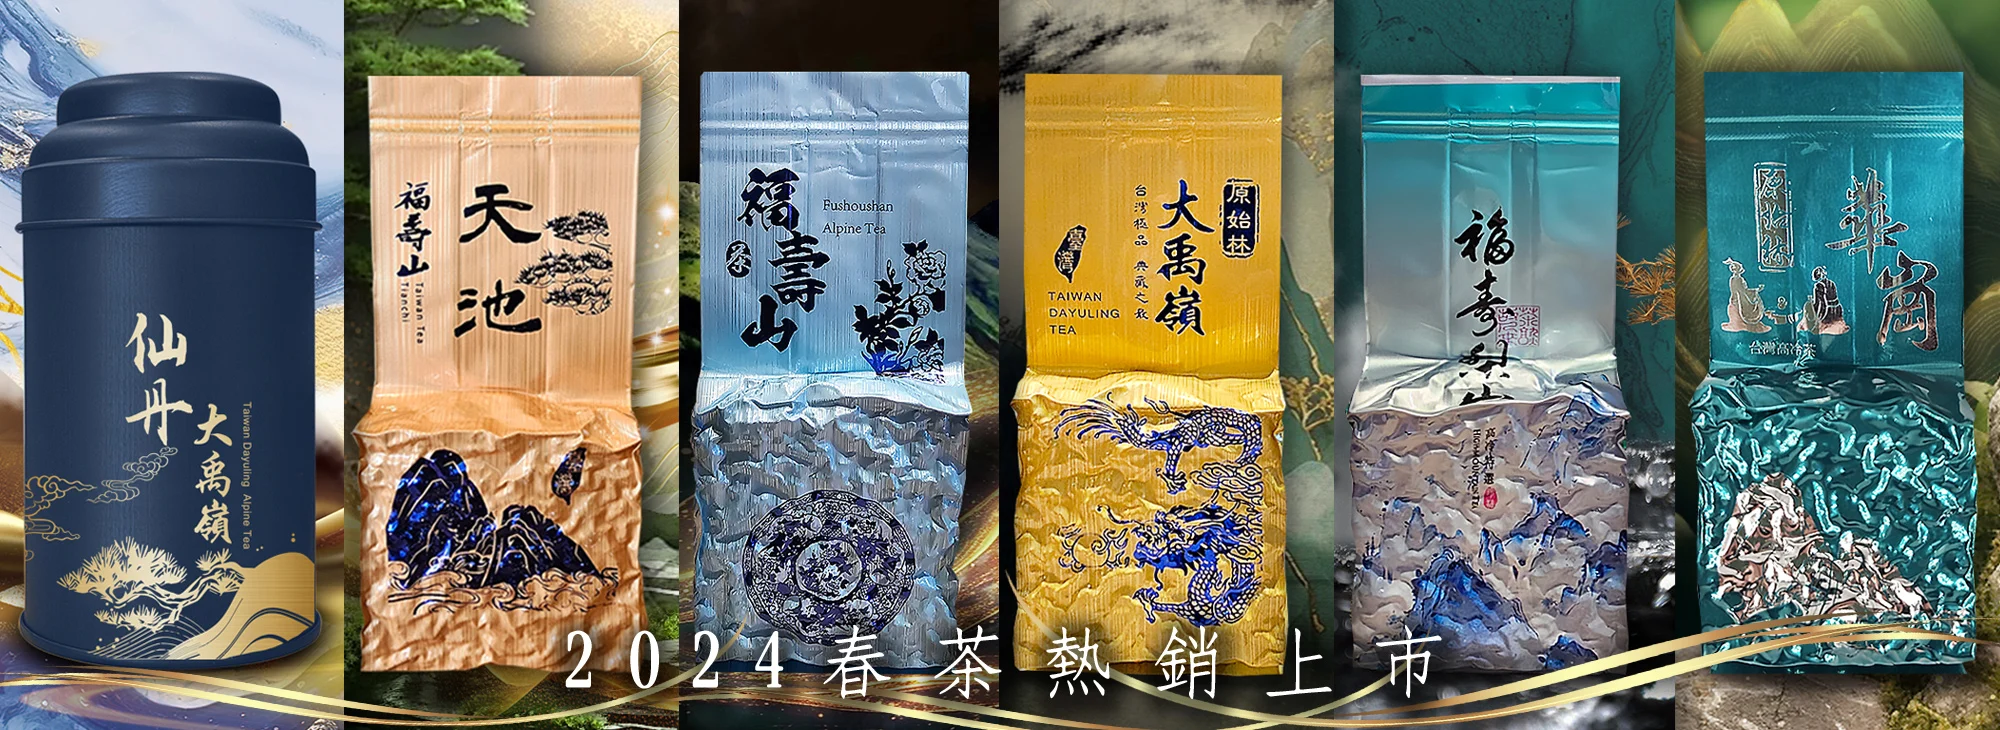 Banner 春茶2